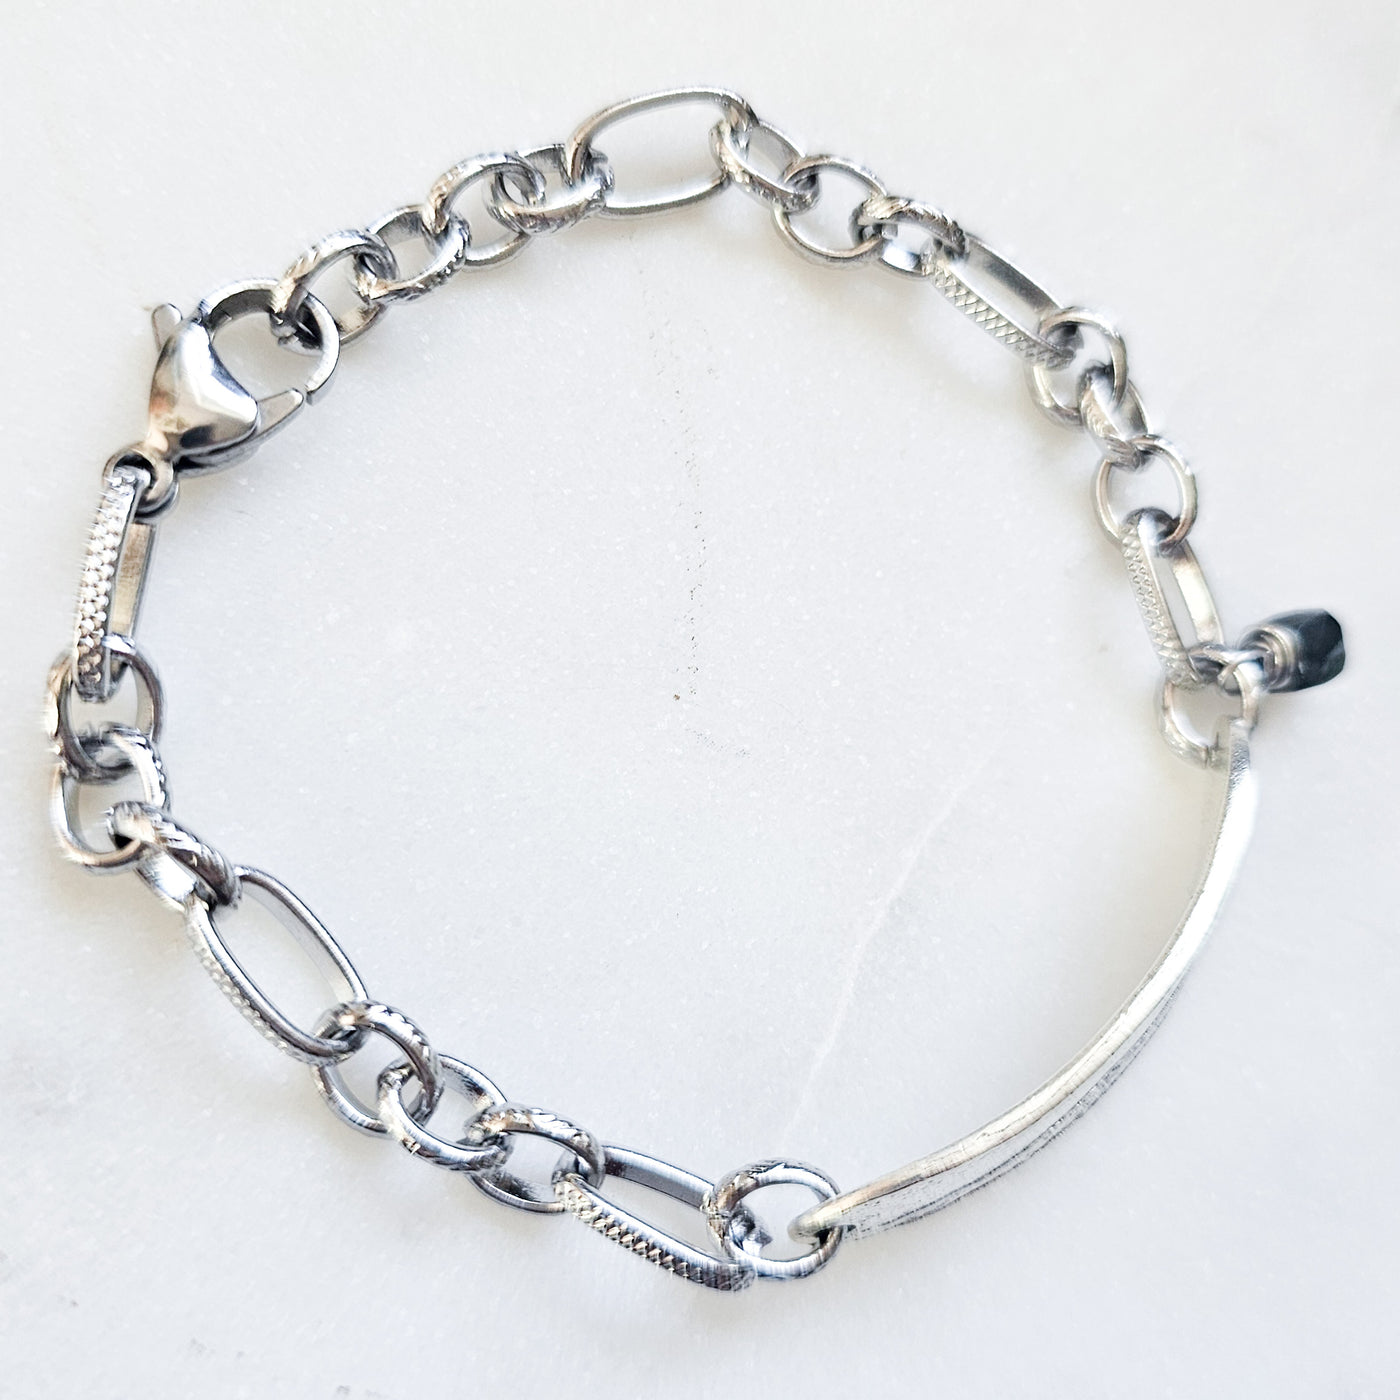 Leaf Connecter + Moss Agate Bead Charm + Steel Chain Bracelet